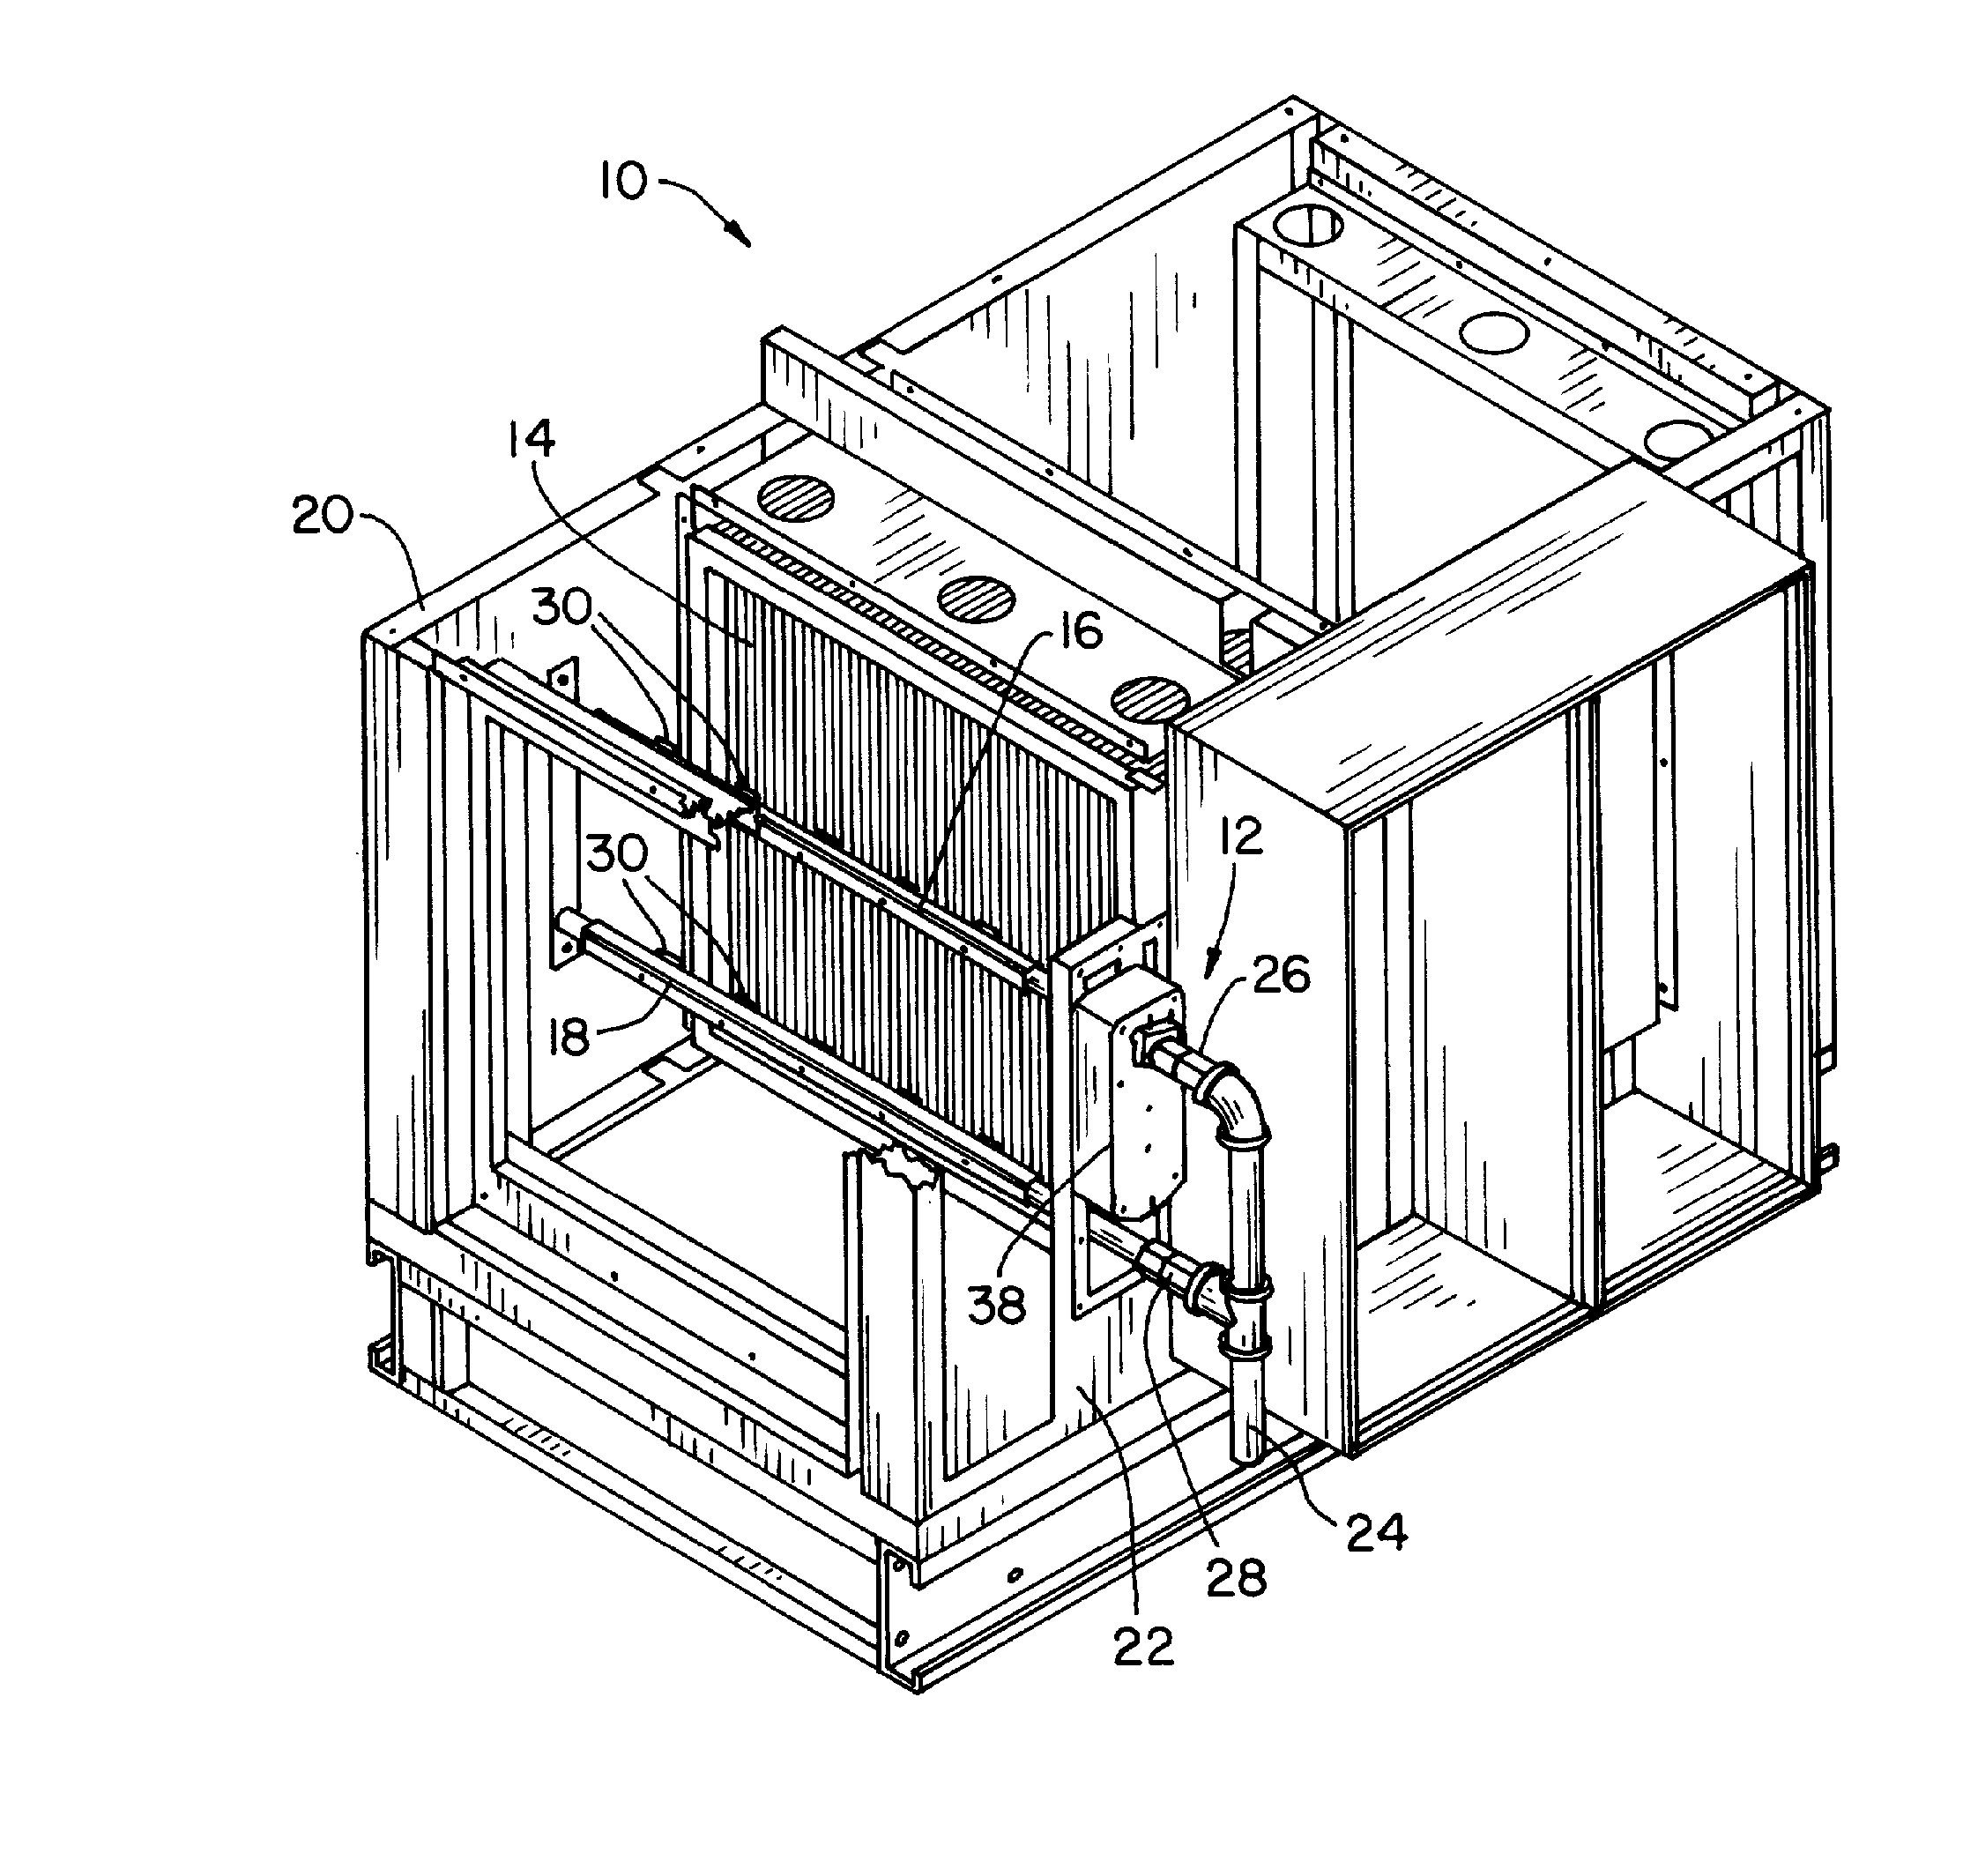 Electrostatic precipitator wash system